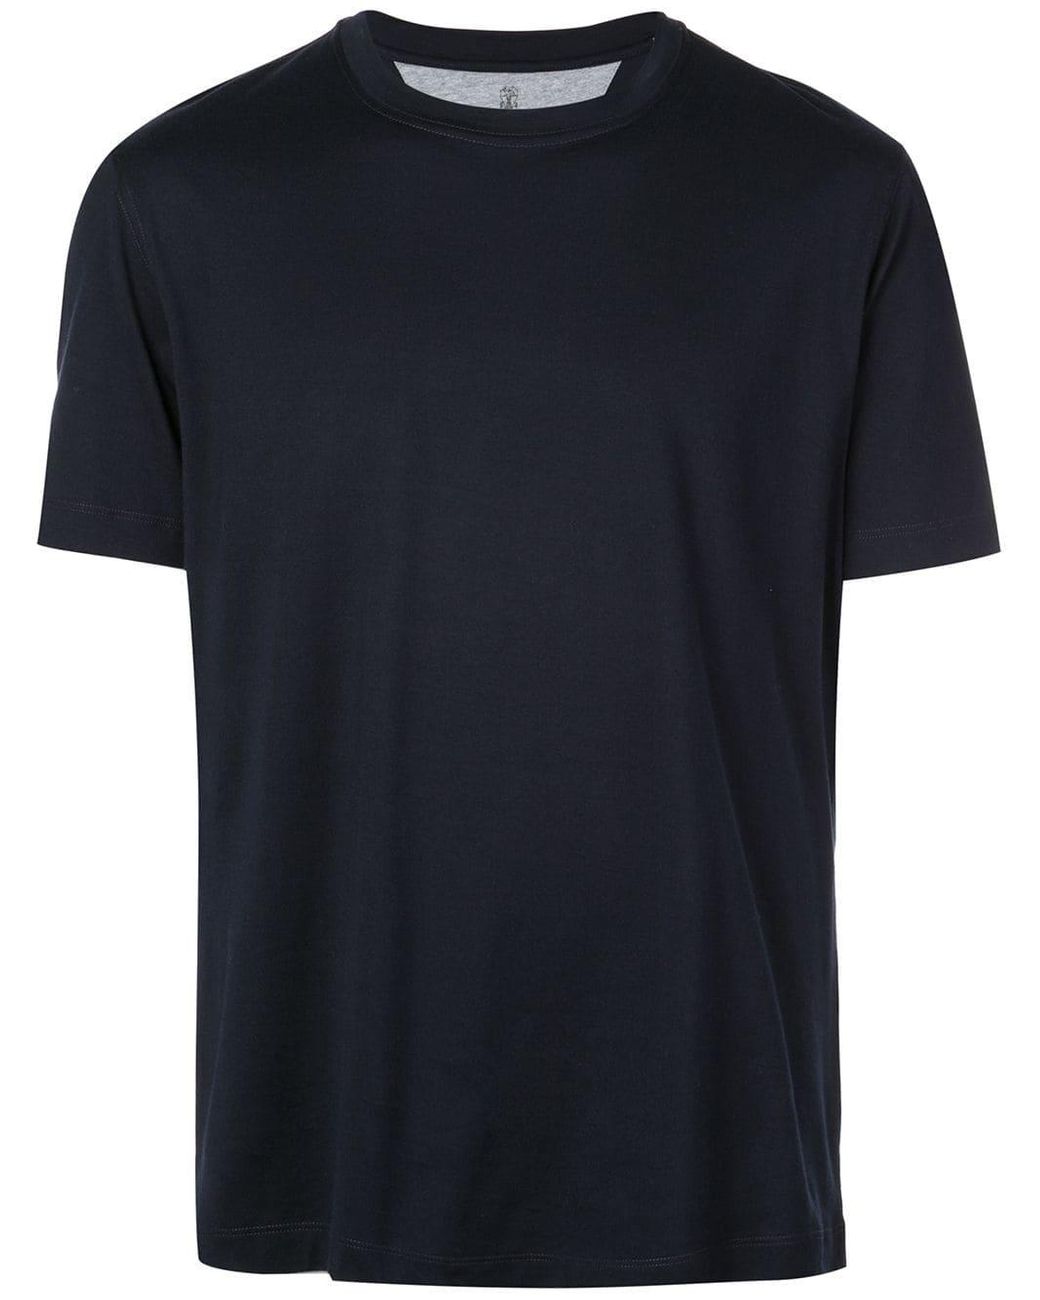 Brunello Cucinelli Cotton Crew Neck T-shirt in Blue for Men - Lyst